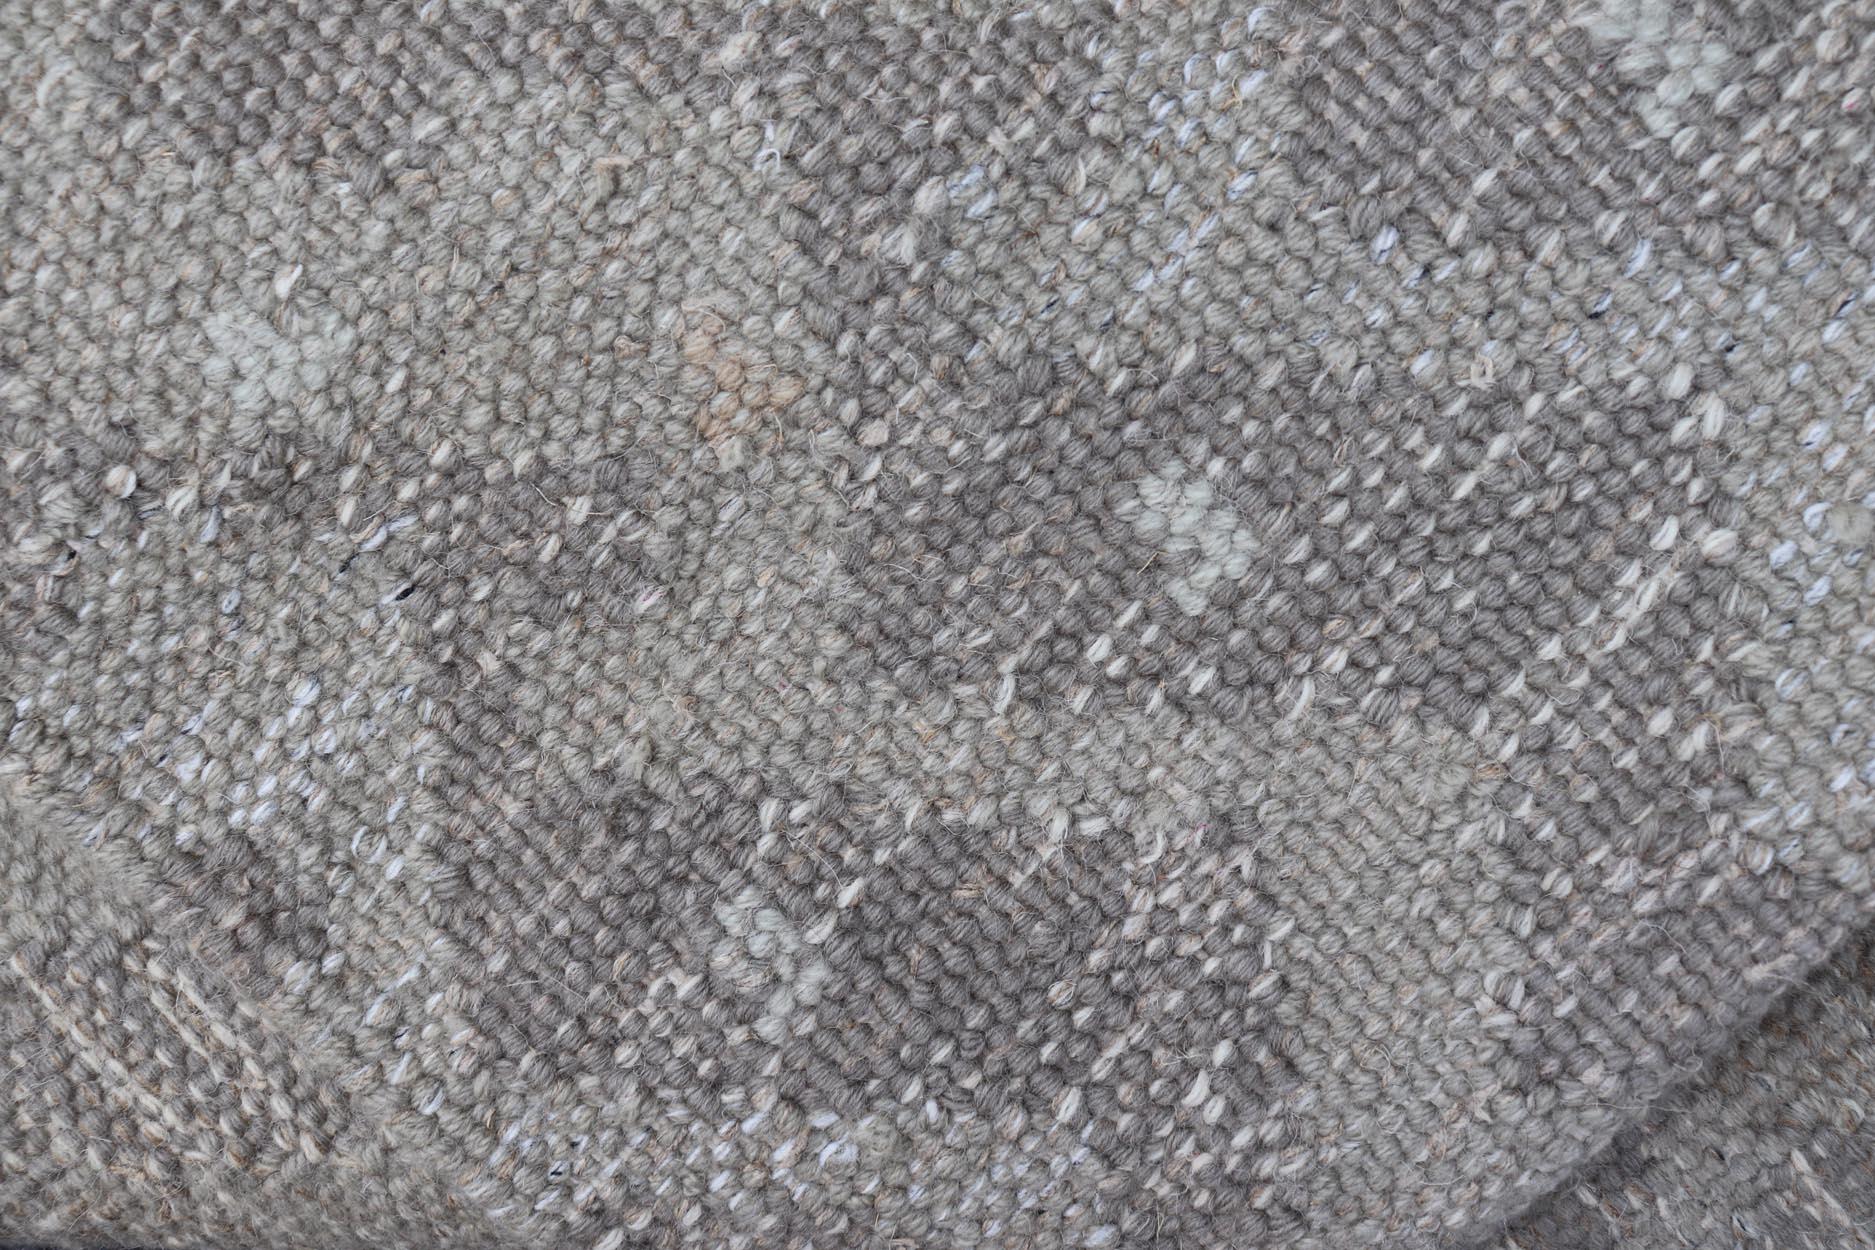 Wool Geometric Modern Scandinavian Flat-Weave Design Rug in Gray And Light Gray Tones For Sale